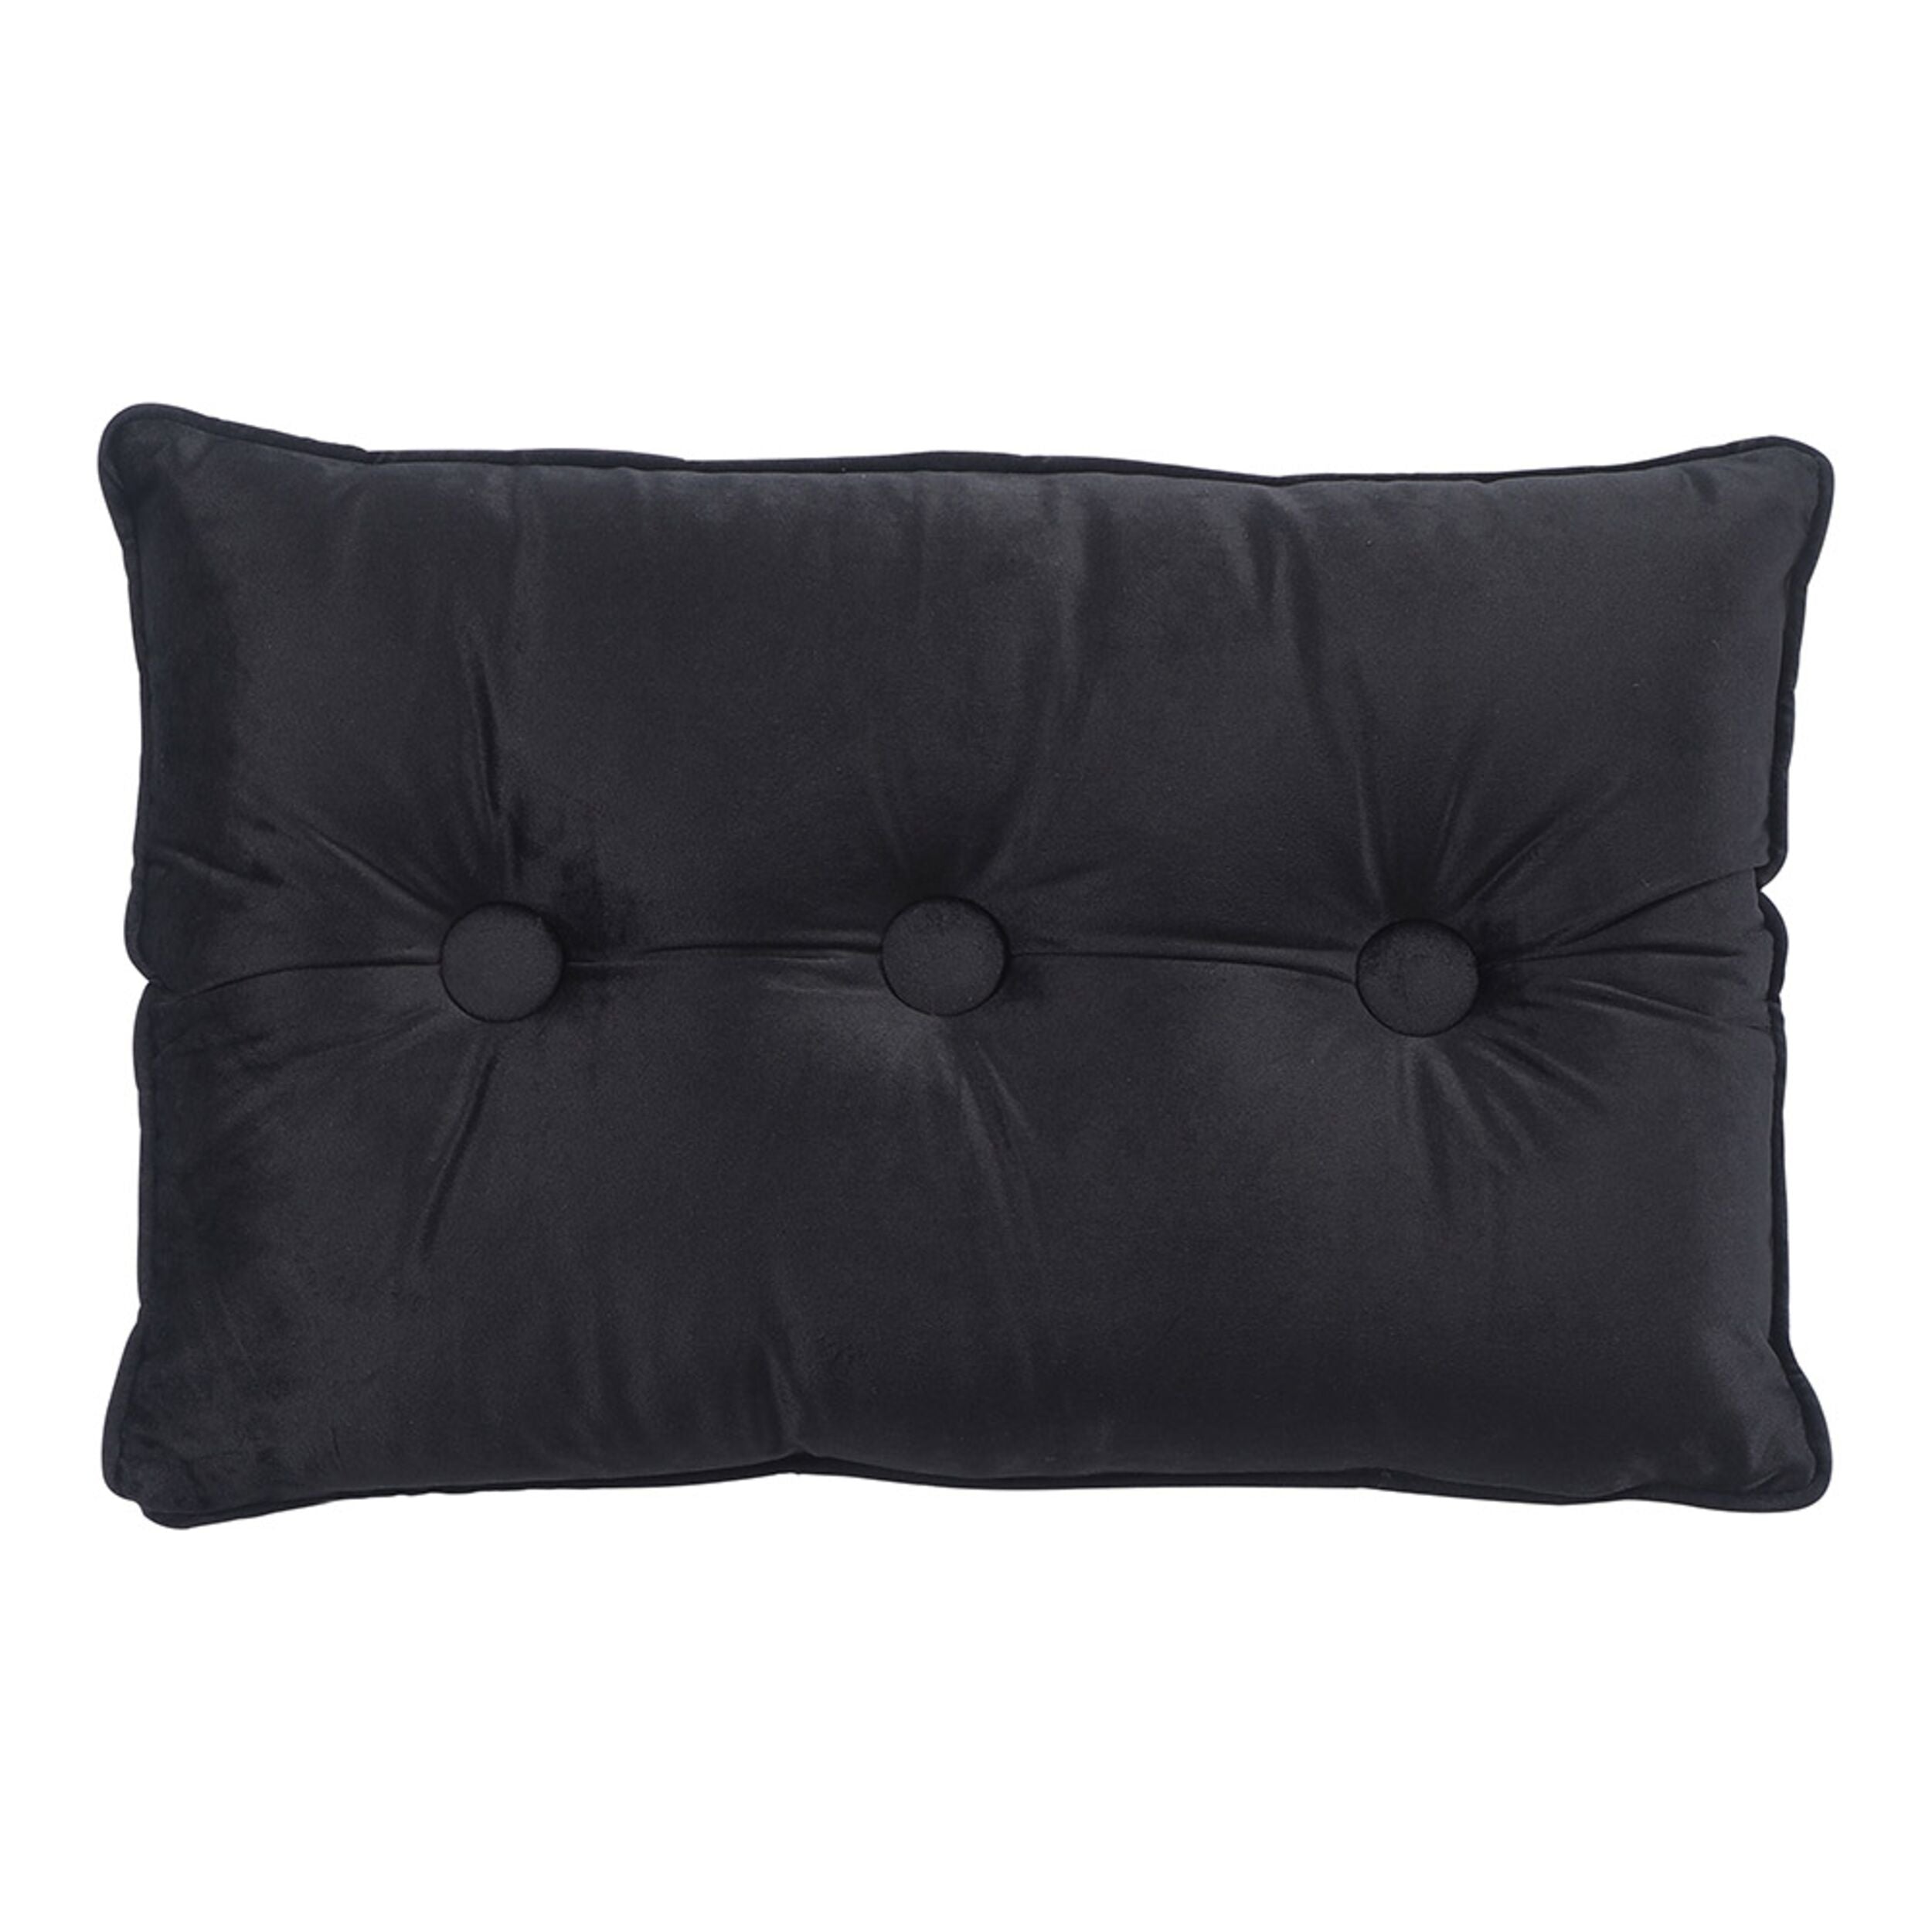 Midnight Max Black Decorative Button Cushion 60x40cm